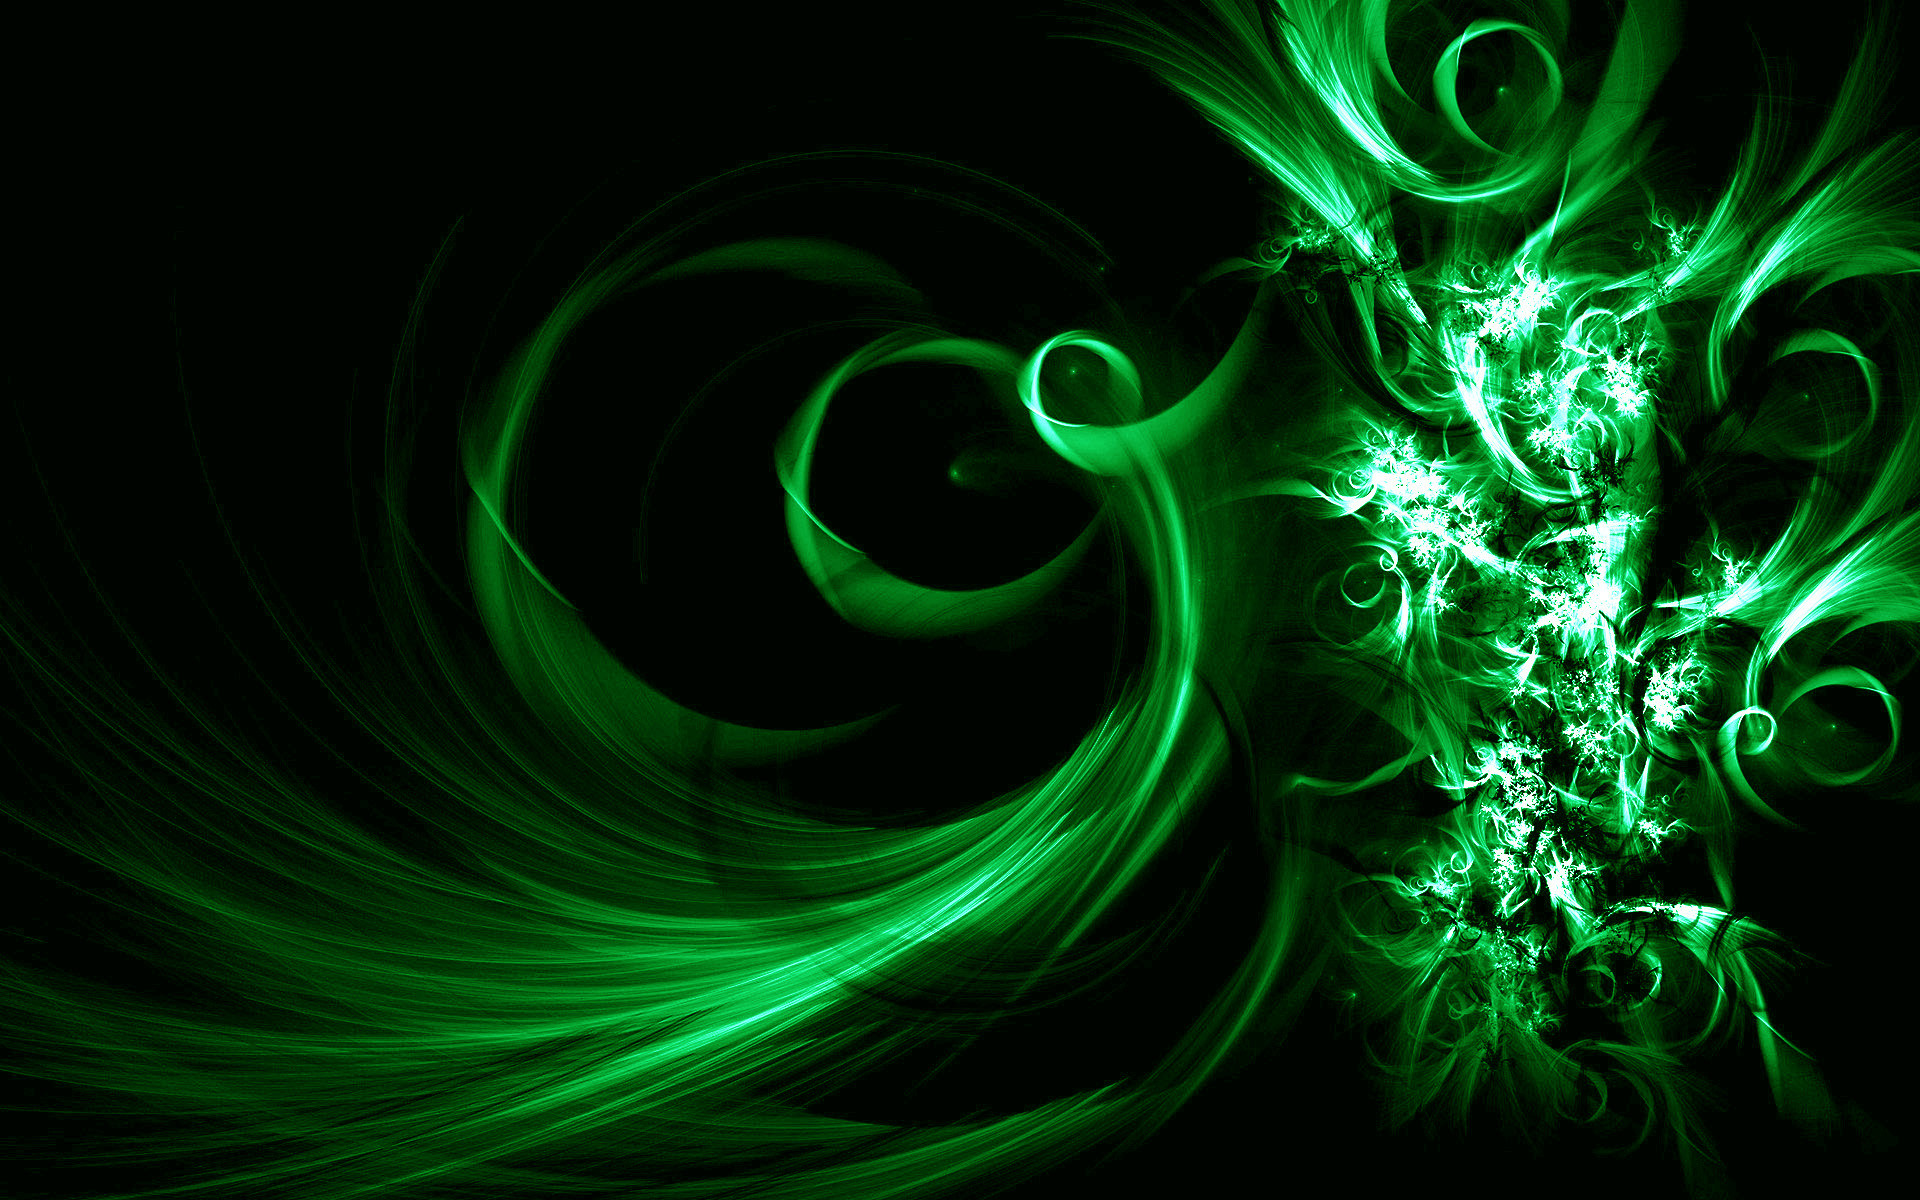 Image Description: This is Black and Green Vector Abstract Desktop Wallpaper  in Buubi.com